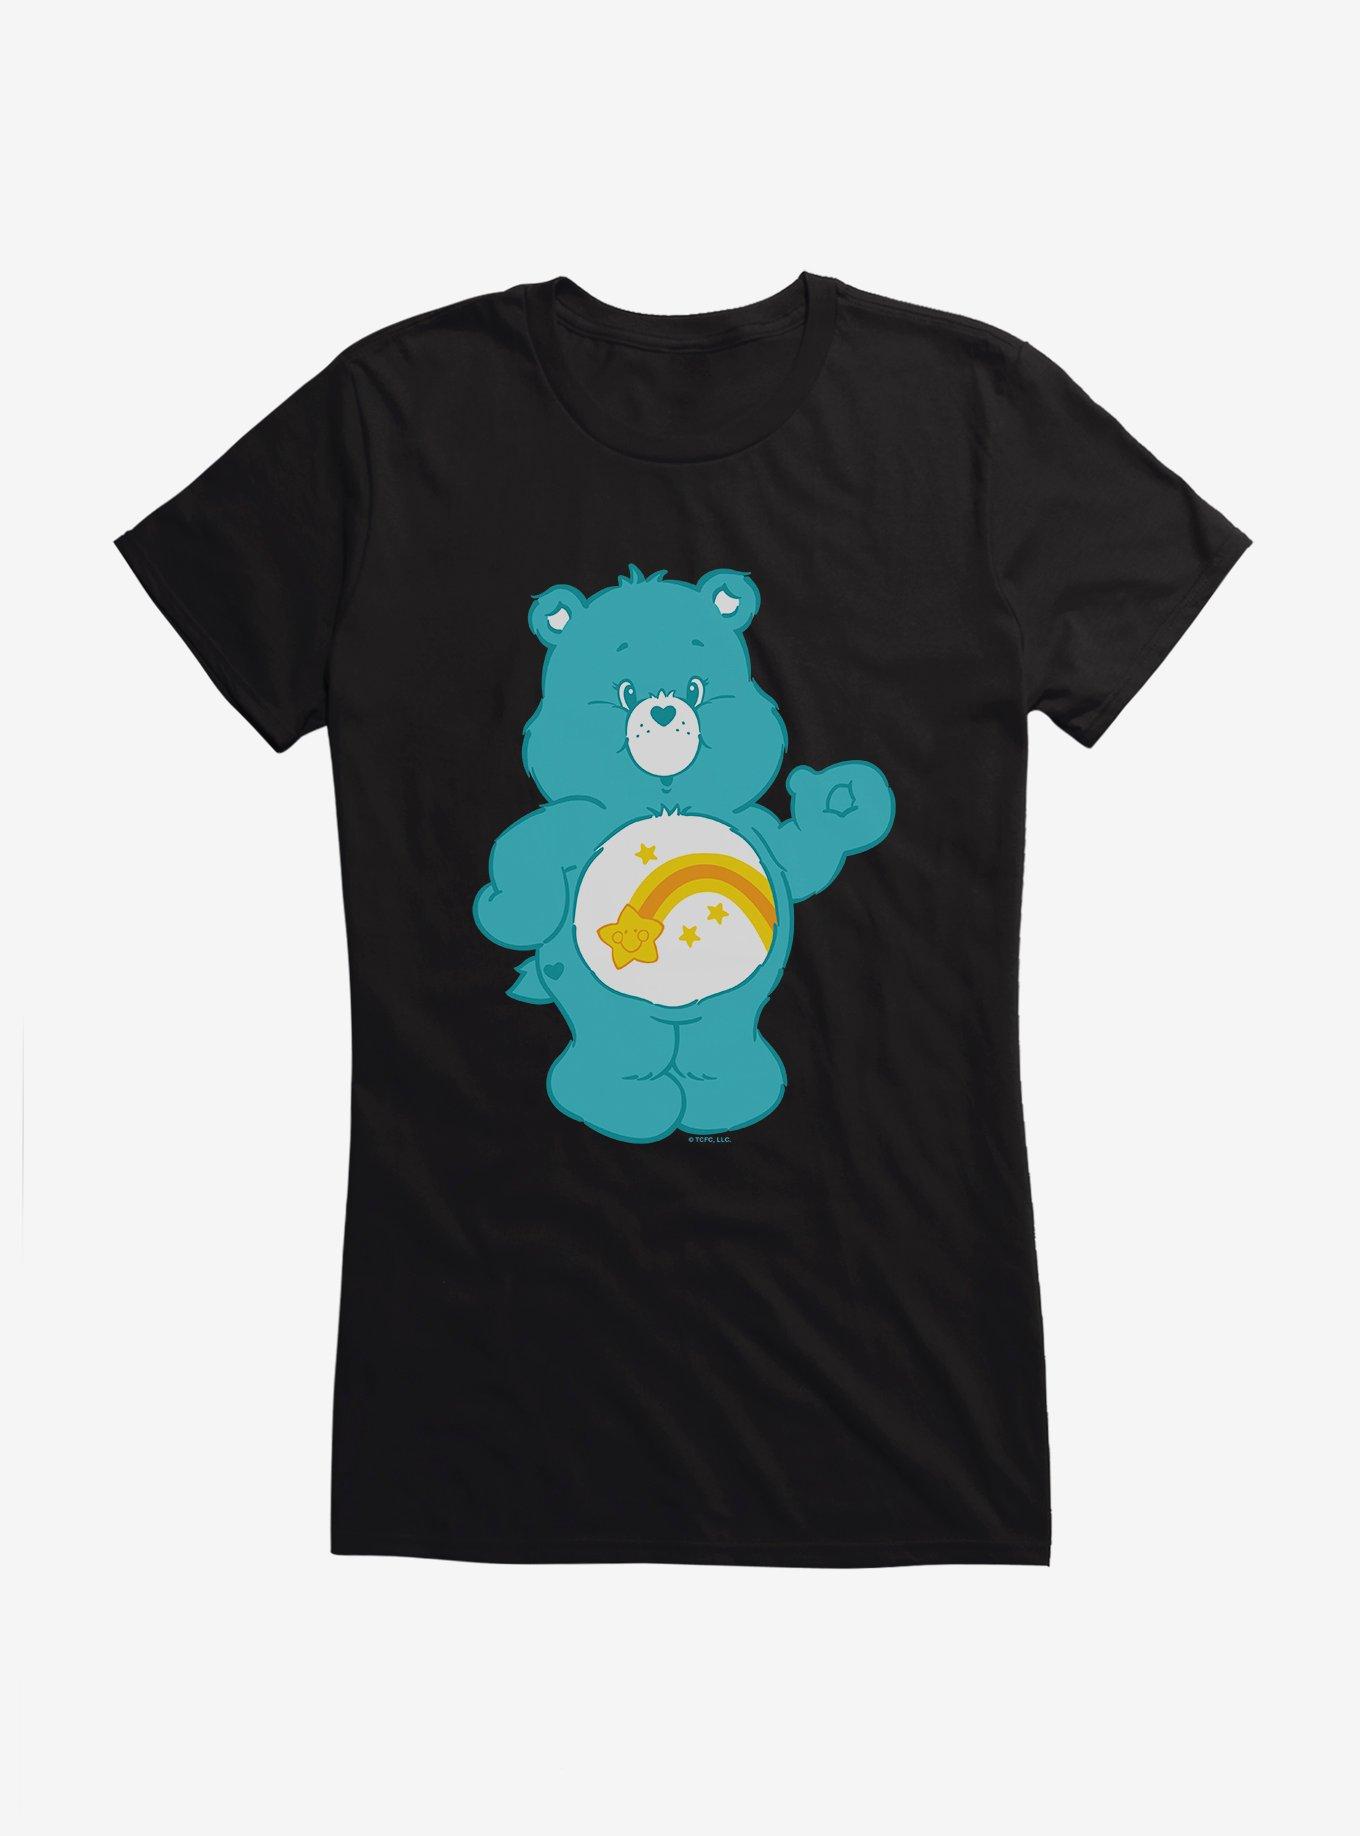 Care Bears Wish Bear Girls T-Shirt